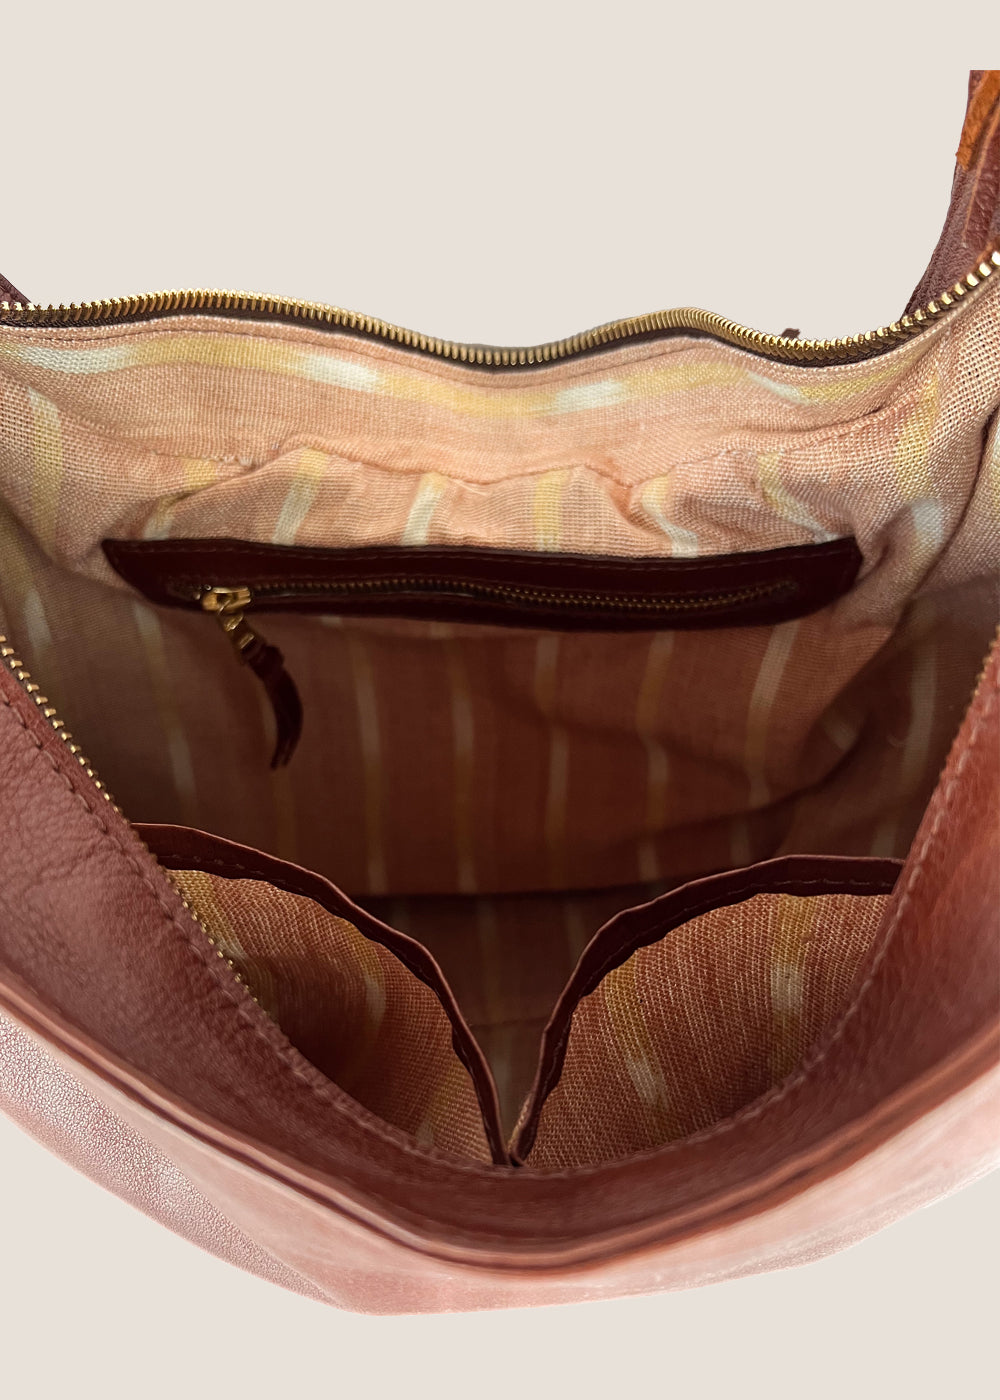 Cognac Prada Odette Leather Mini-bag | PRADA